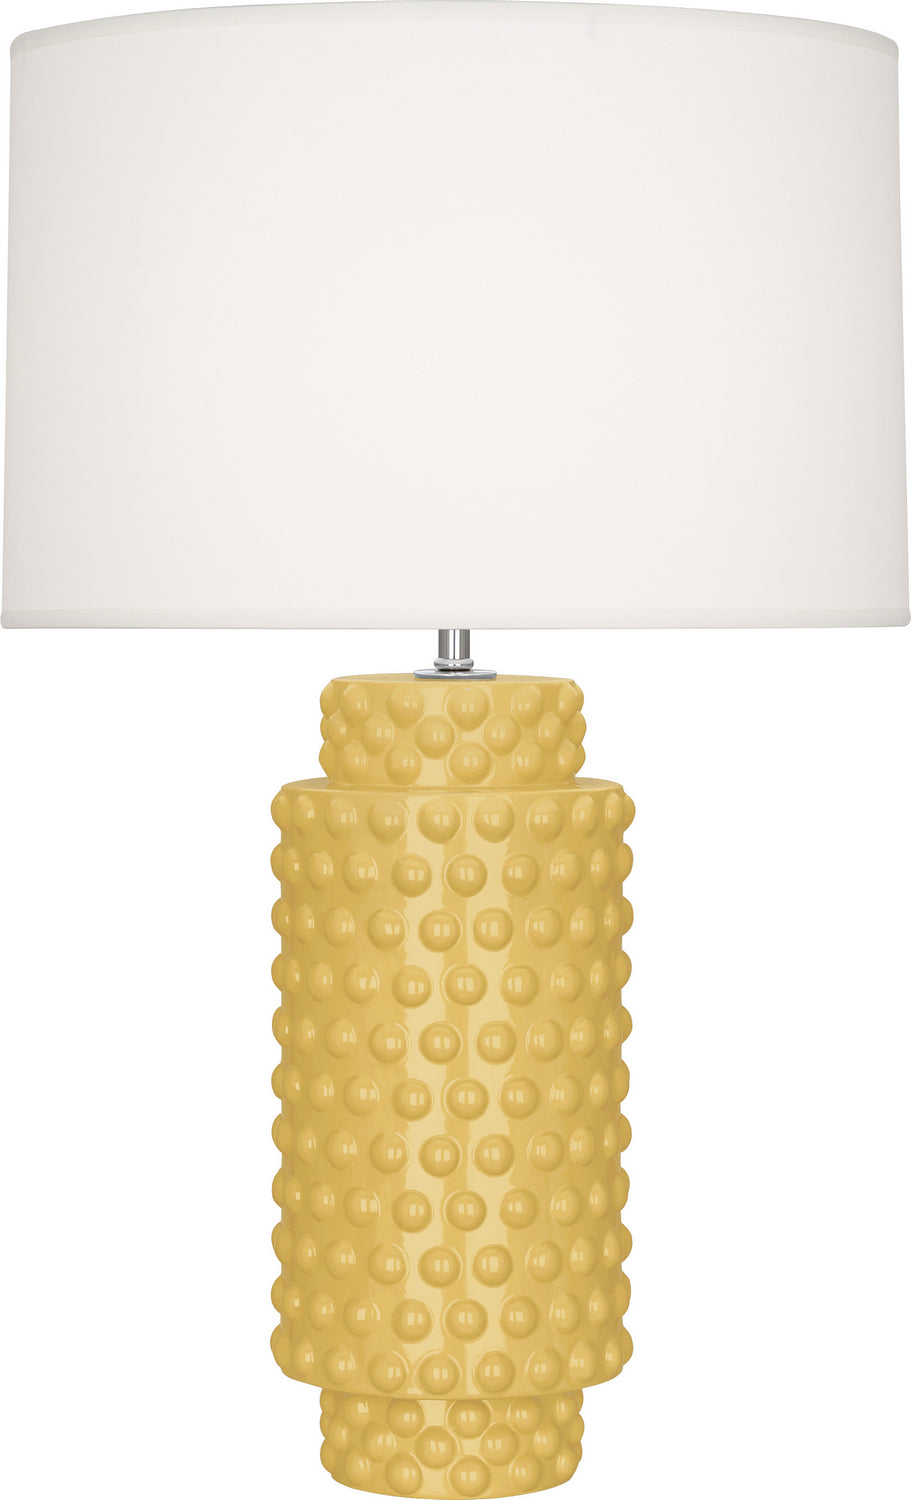 Robert Abbey - One Light Table Lamp - Dolly - Sunset Yellow Glazed Textured Ceramic- Union Lighting Luminaires Decor